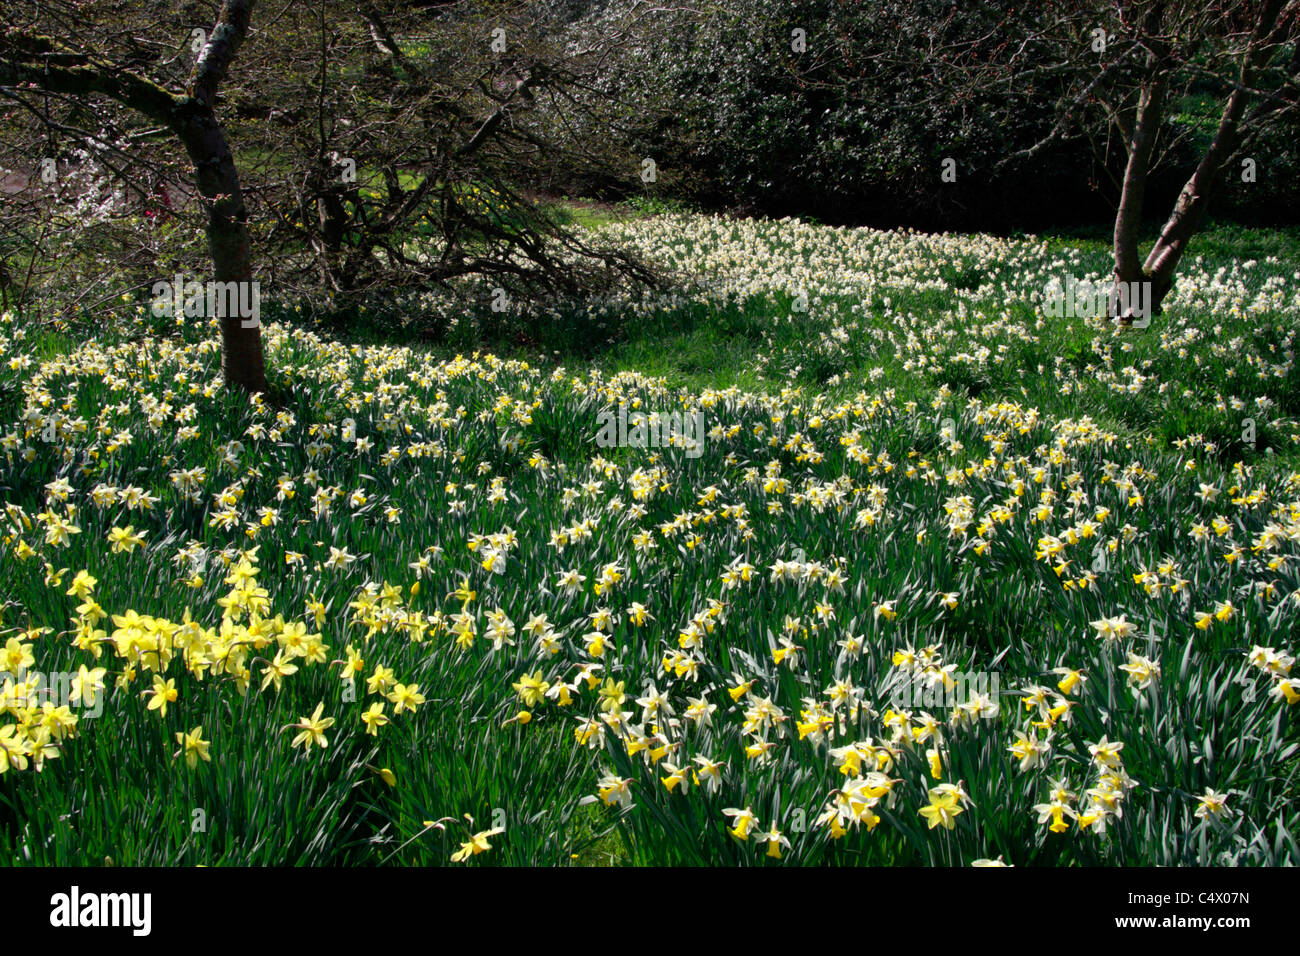 Daffodils in a wild woodland garden Stock Photo